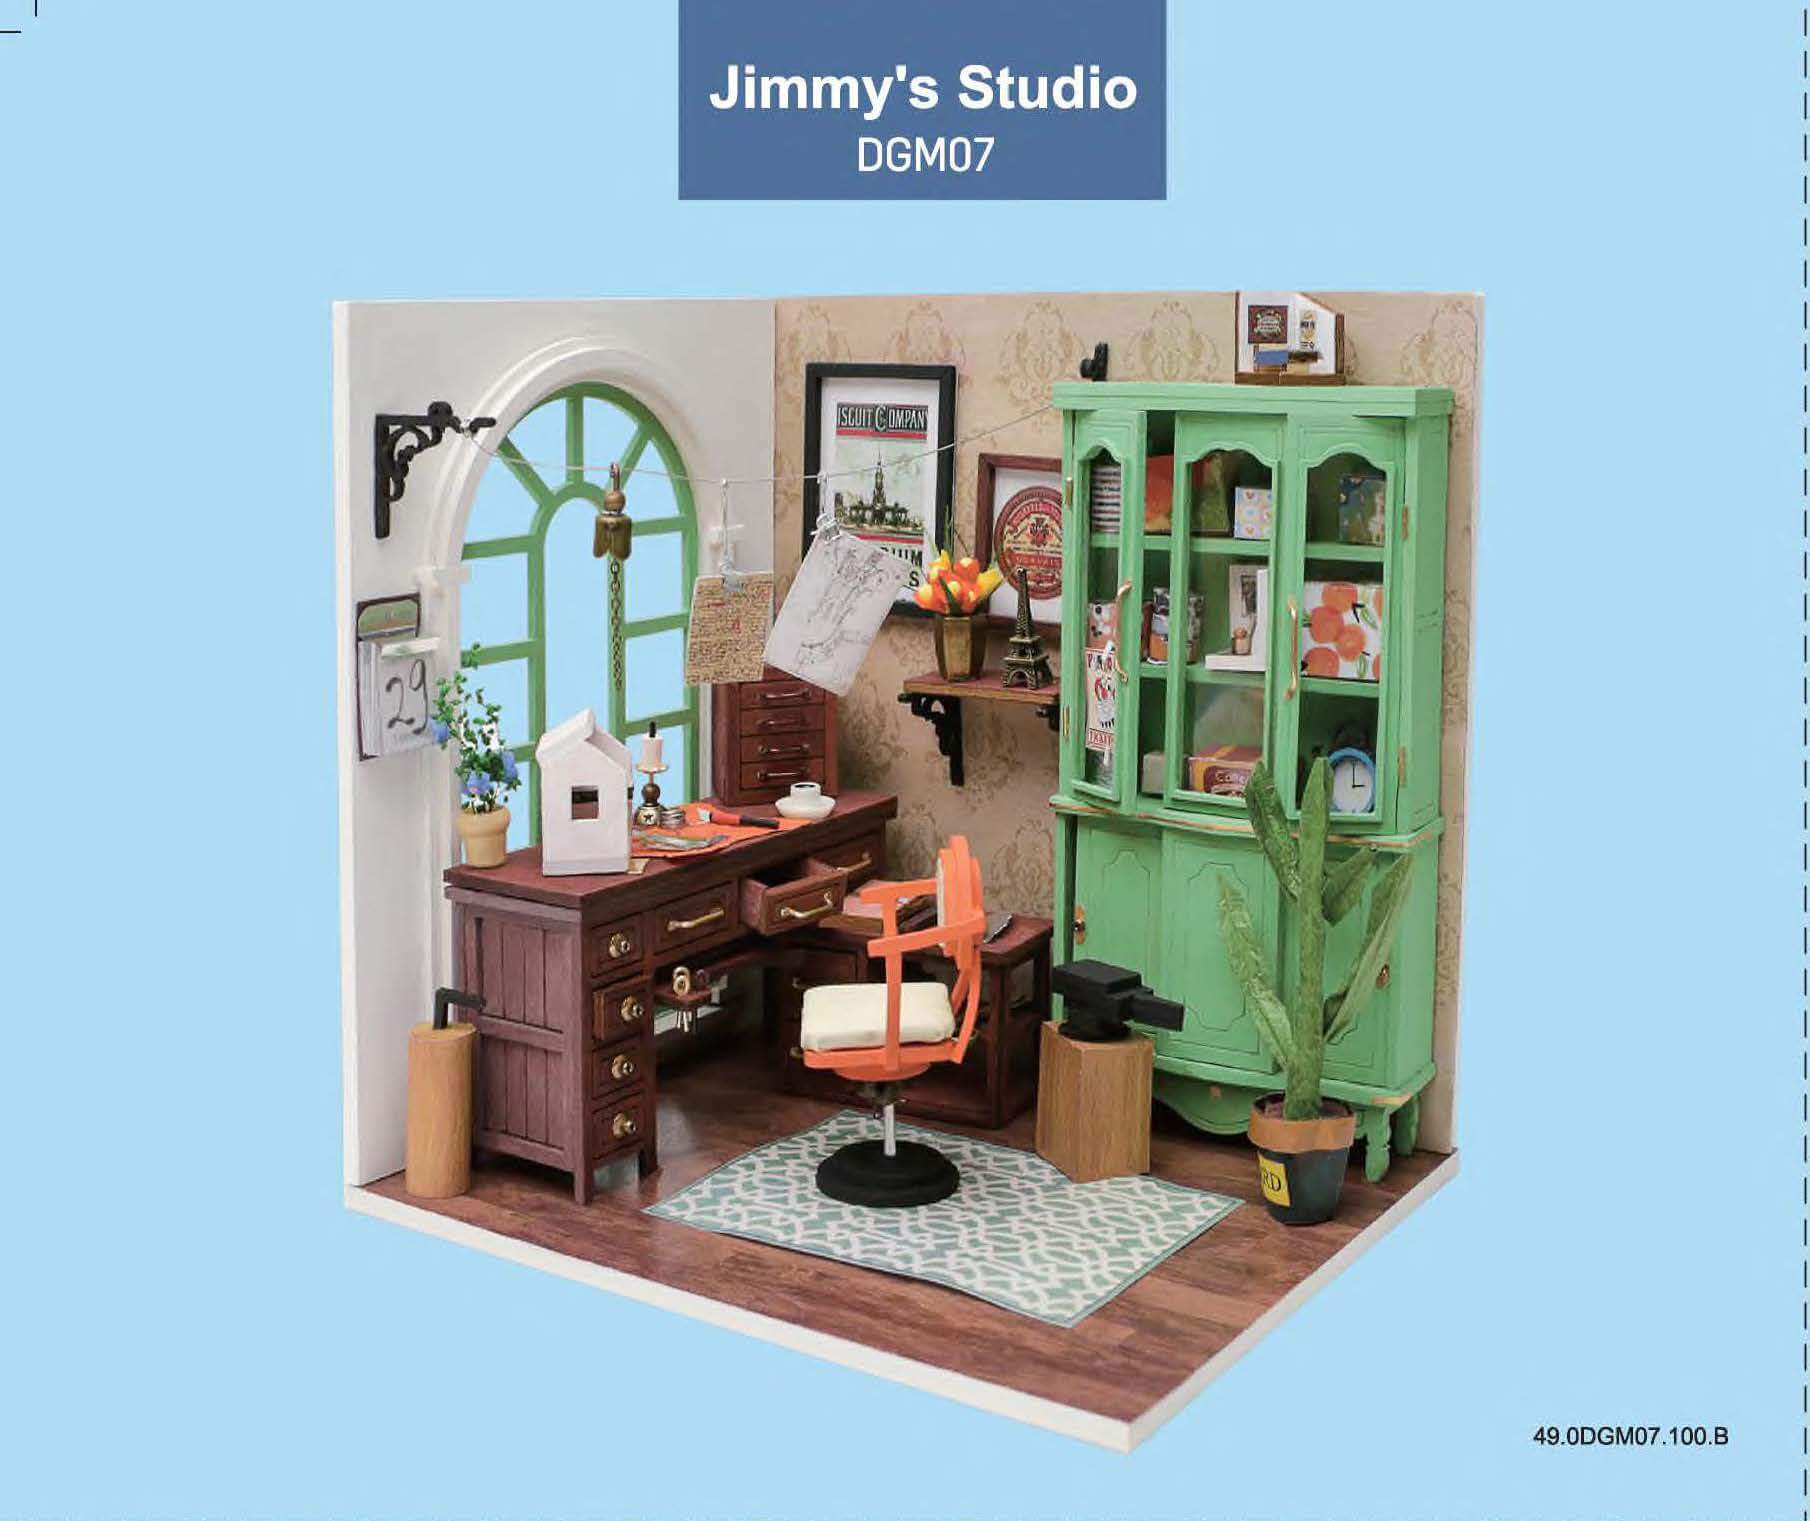 RDGM07 - Jimmy' Studio Manual